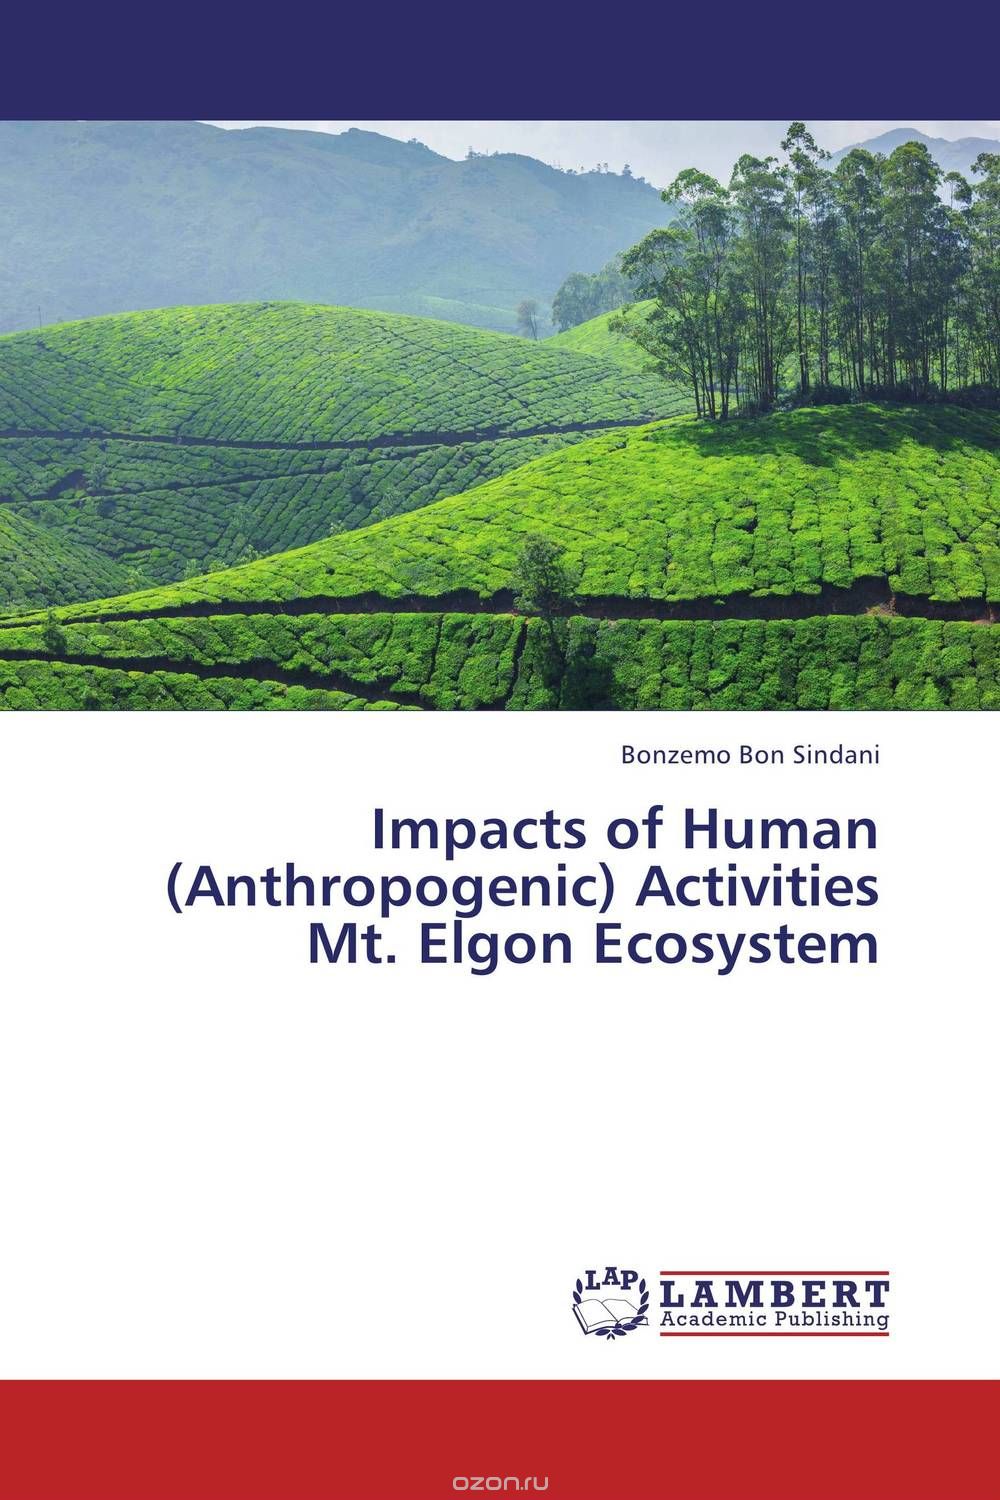 Скачать книгу "Impacts of Human (Anthropogenic) Activities Mt. Elgon Ecosystem"